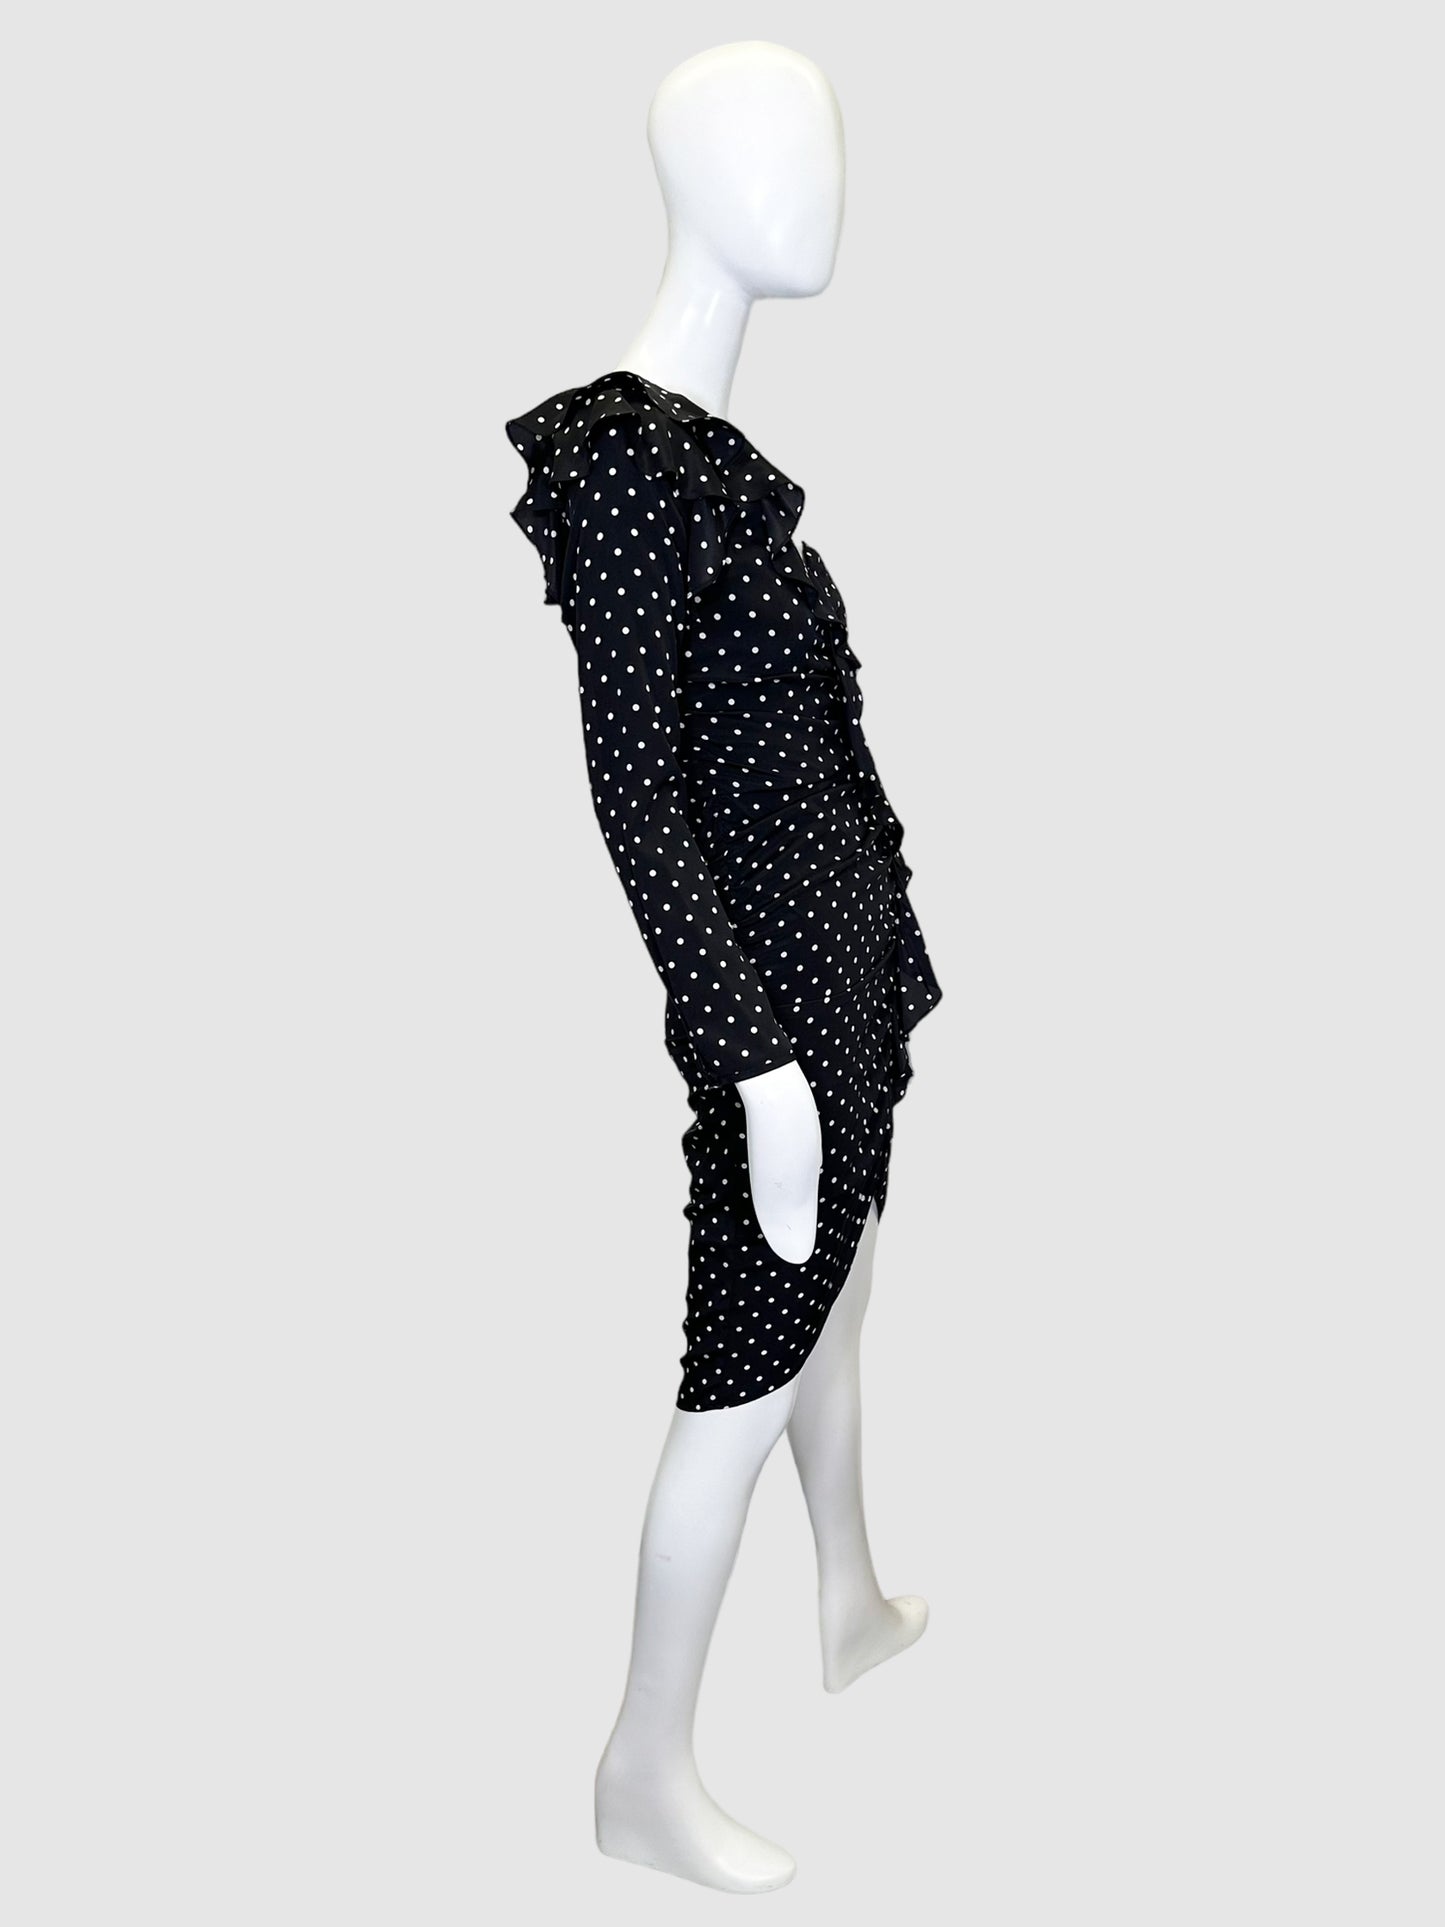 Veronica Beard Polka-Dot Open-Shoulder Dress - Size 2